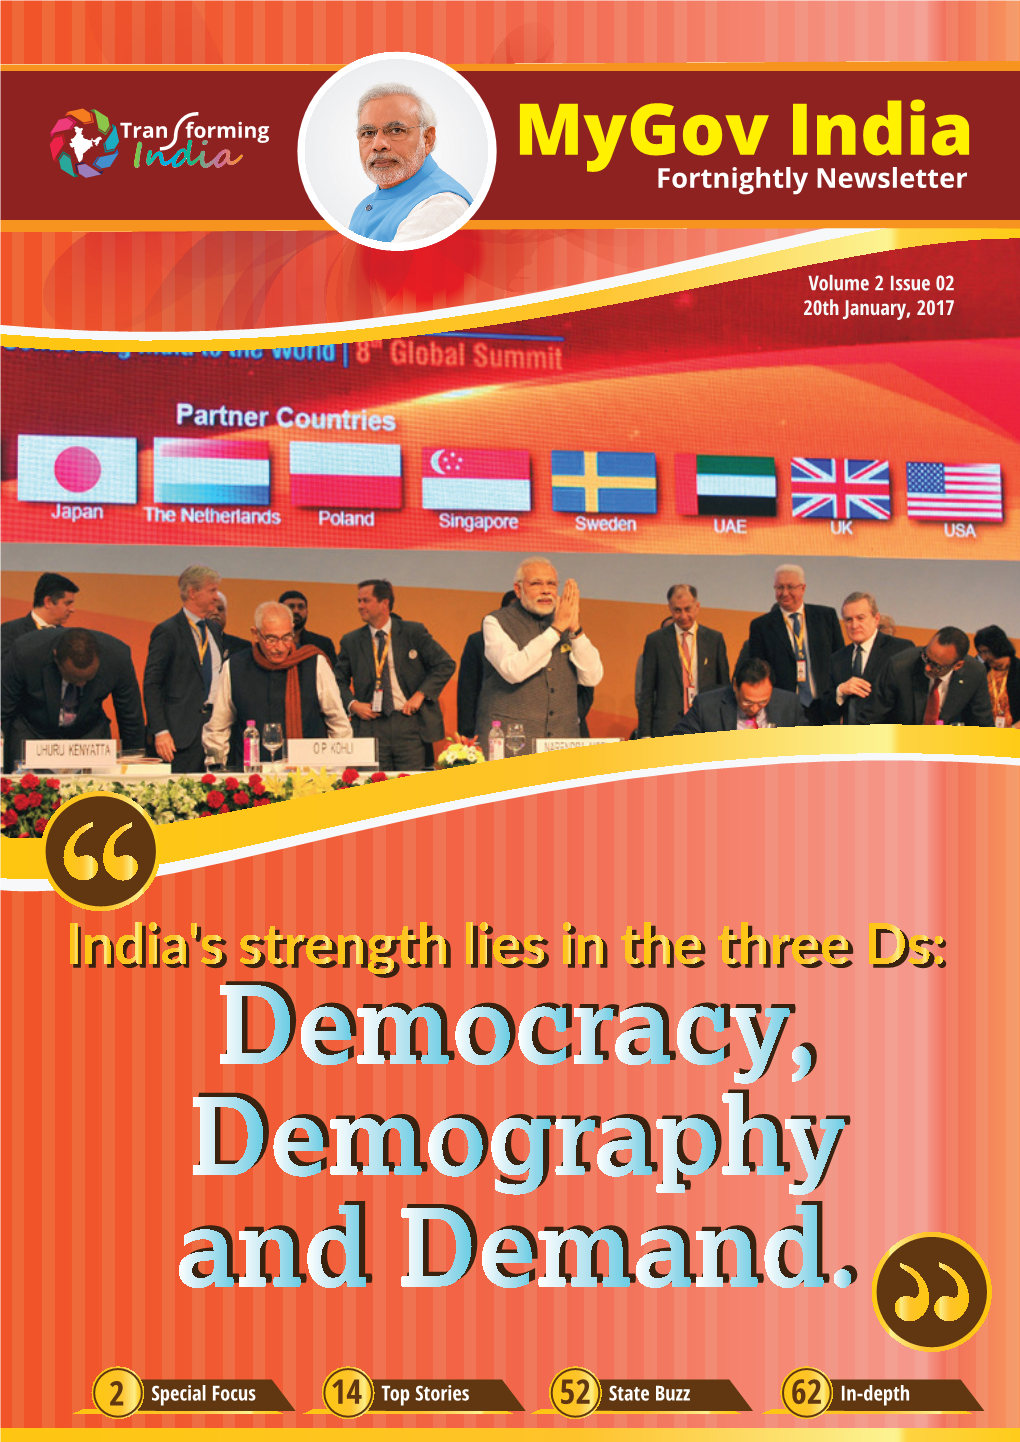 Democracy, Demography and Demand